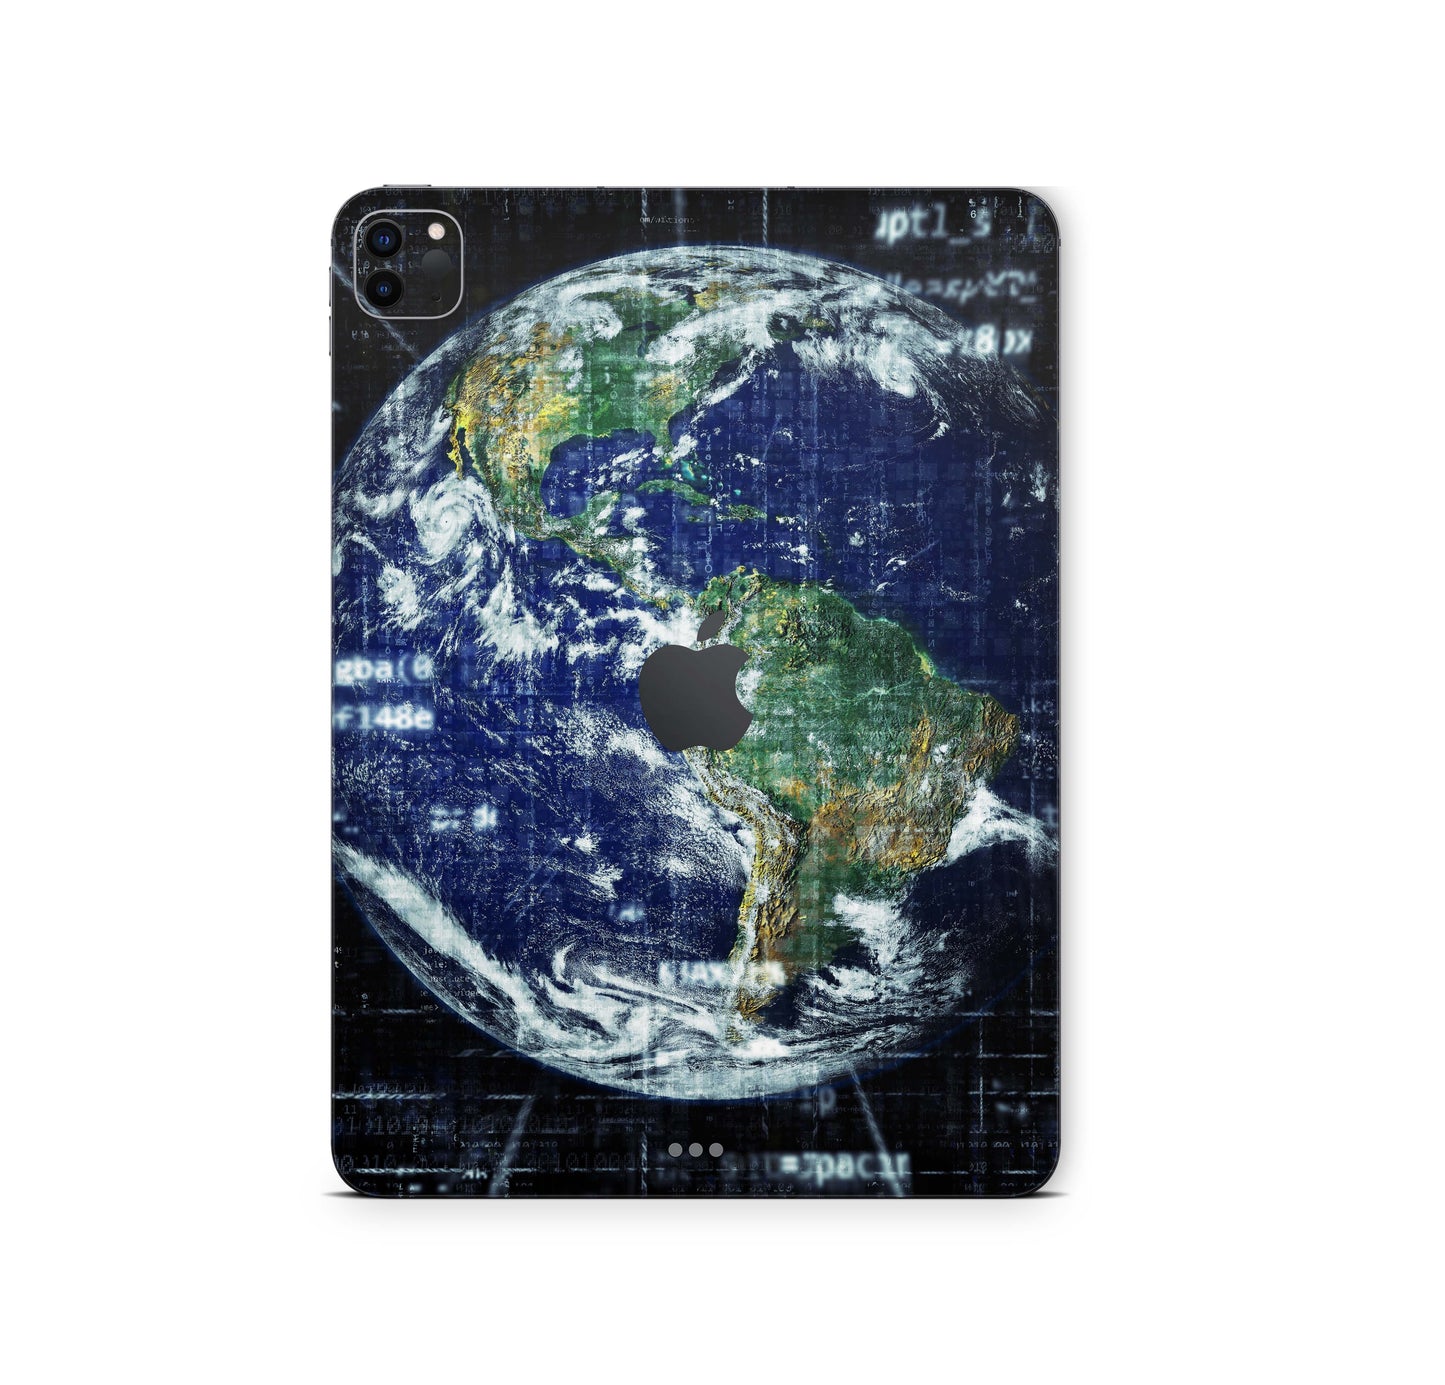 iPad Pro Skin 11" 3.Generation M1 2021 Design Cover Folie Vinyl Skins & Wraps Aufkleber Skins4u Digital-Earth  